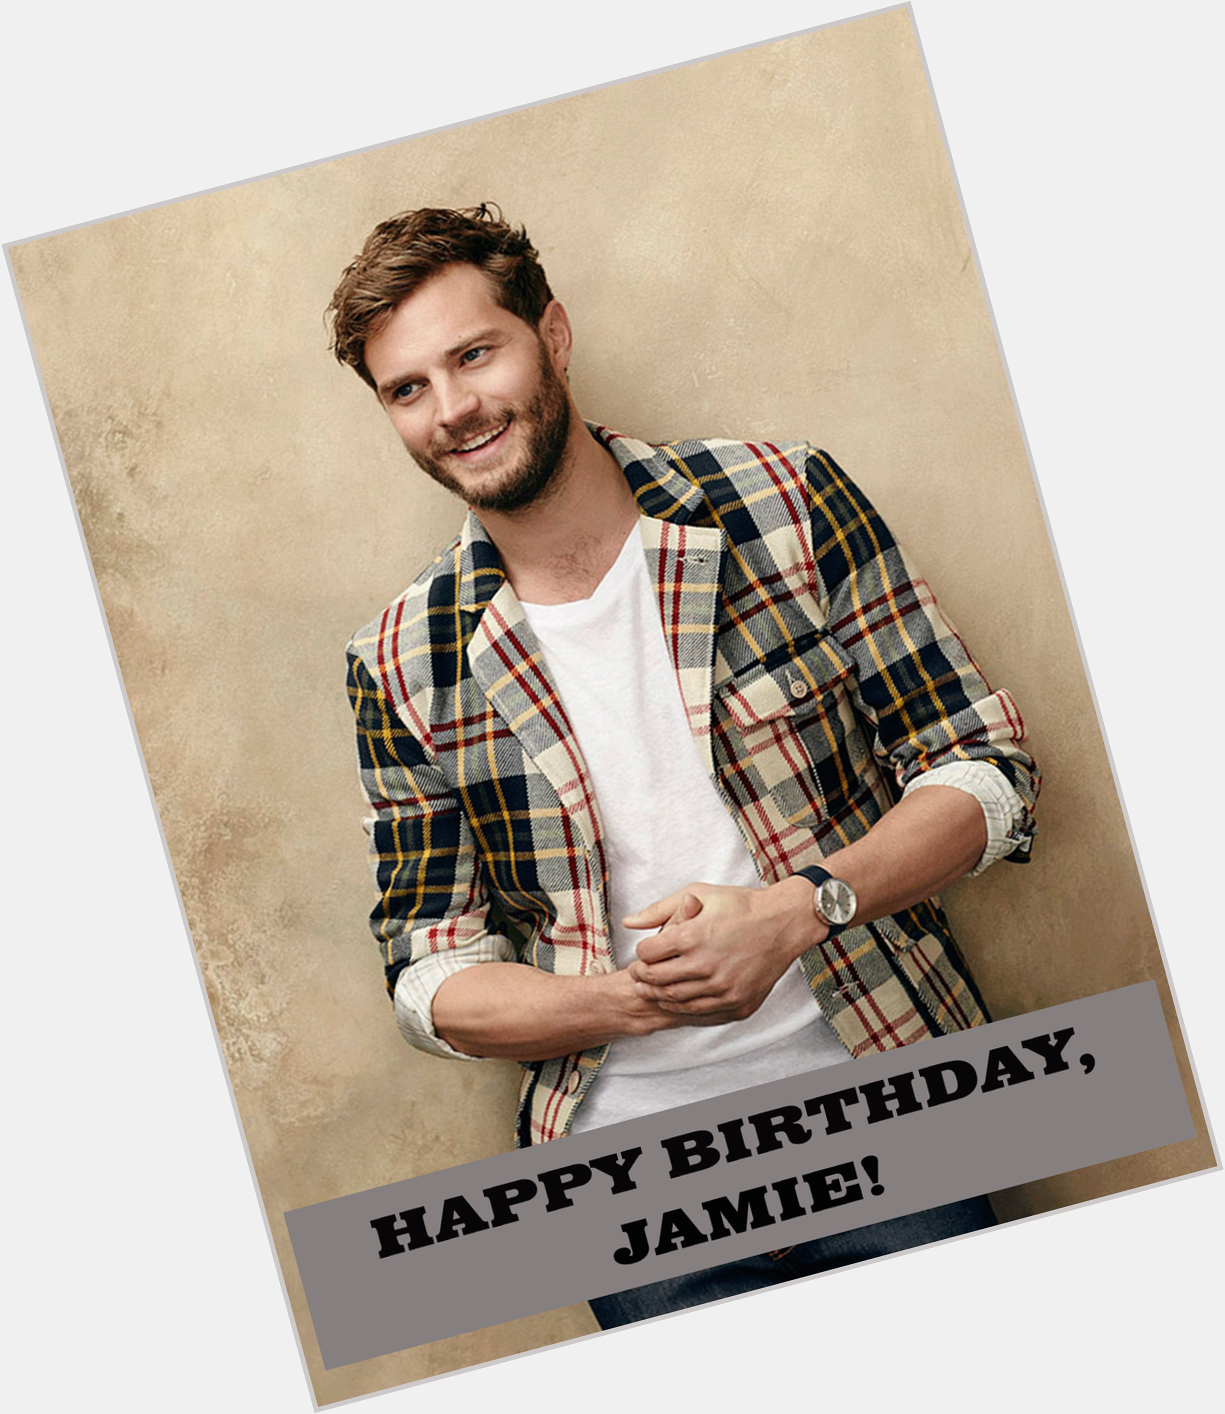 Movie Loft wishing a Happy Birthday to Mr. Fifty Shades of Grey himself, Jamie Dornan!  